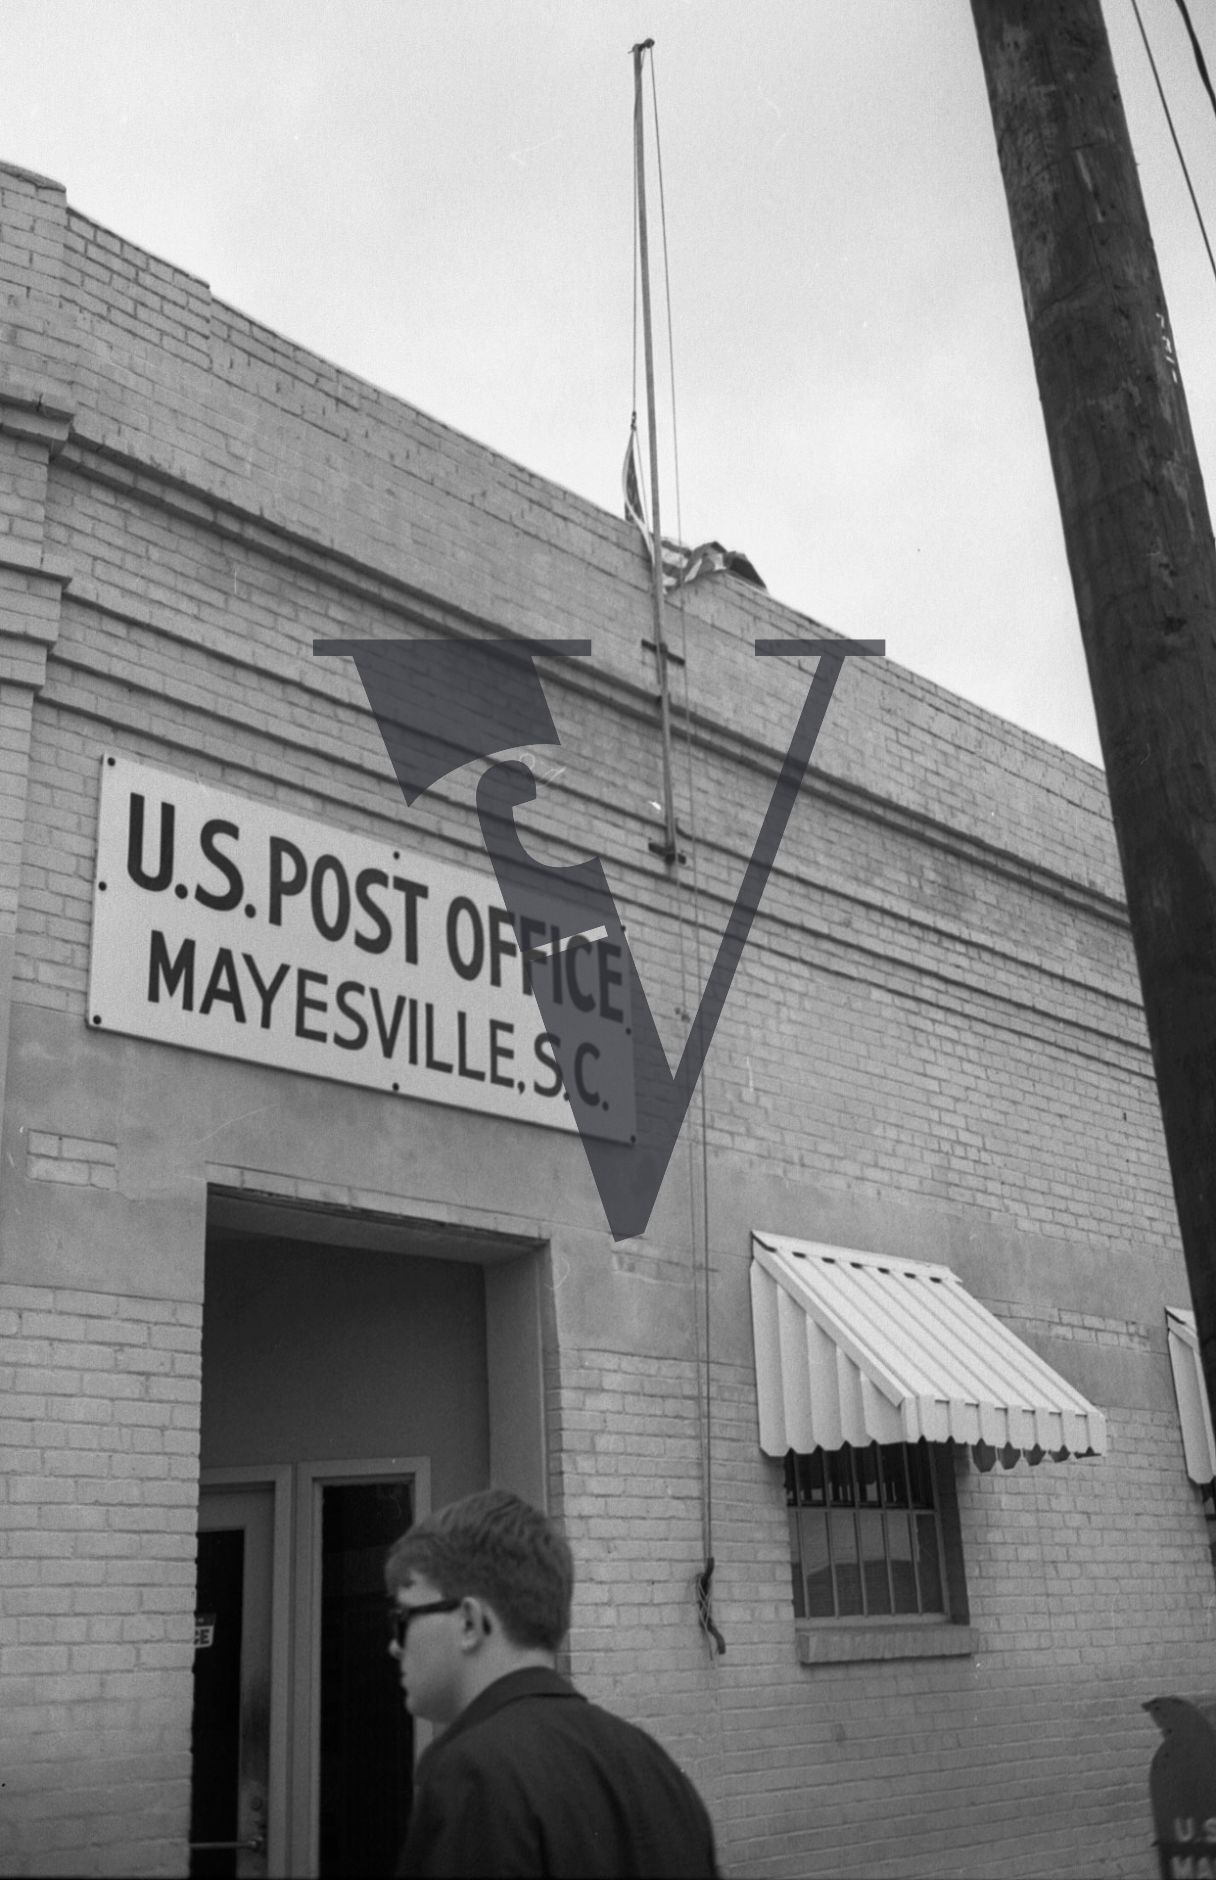 Mayesville, Sumter County, South Carolina, U.S. Post Office, exterior.